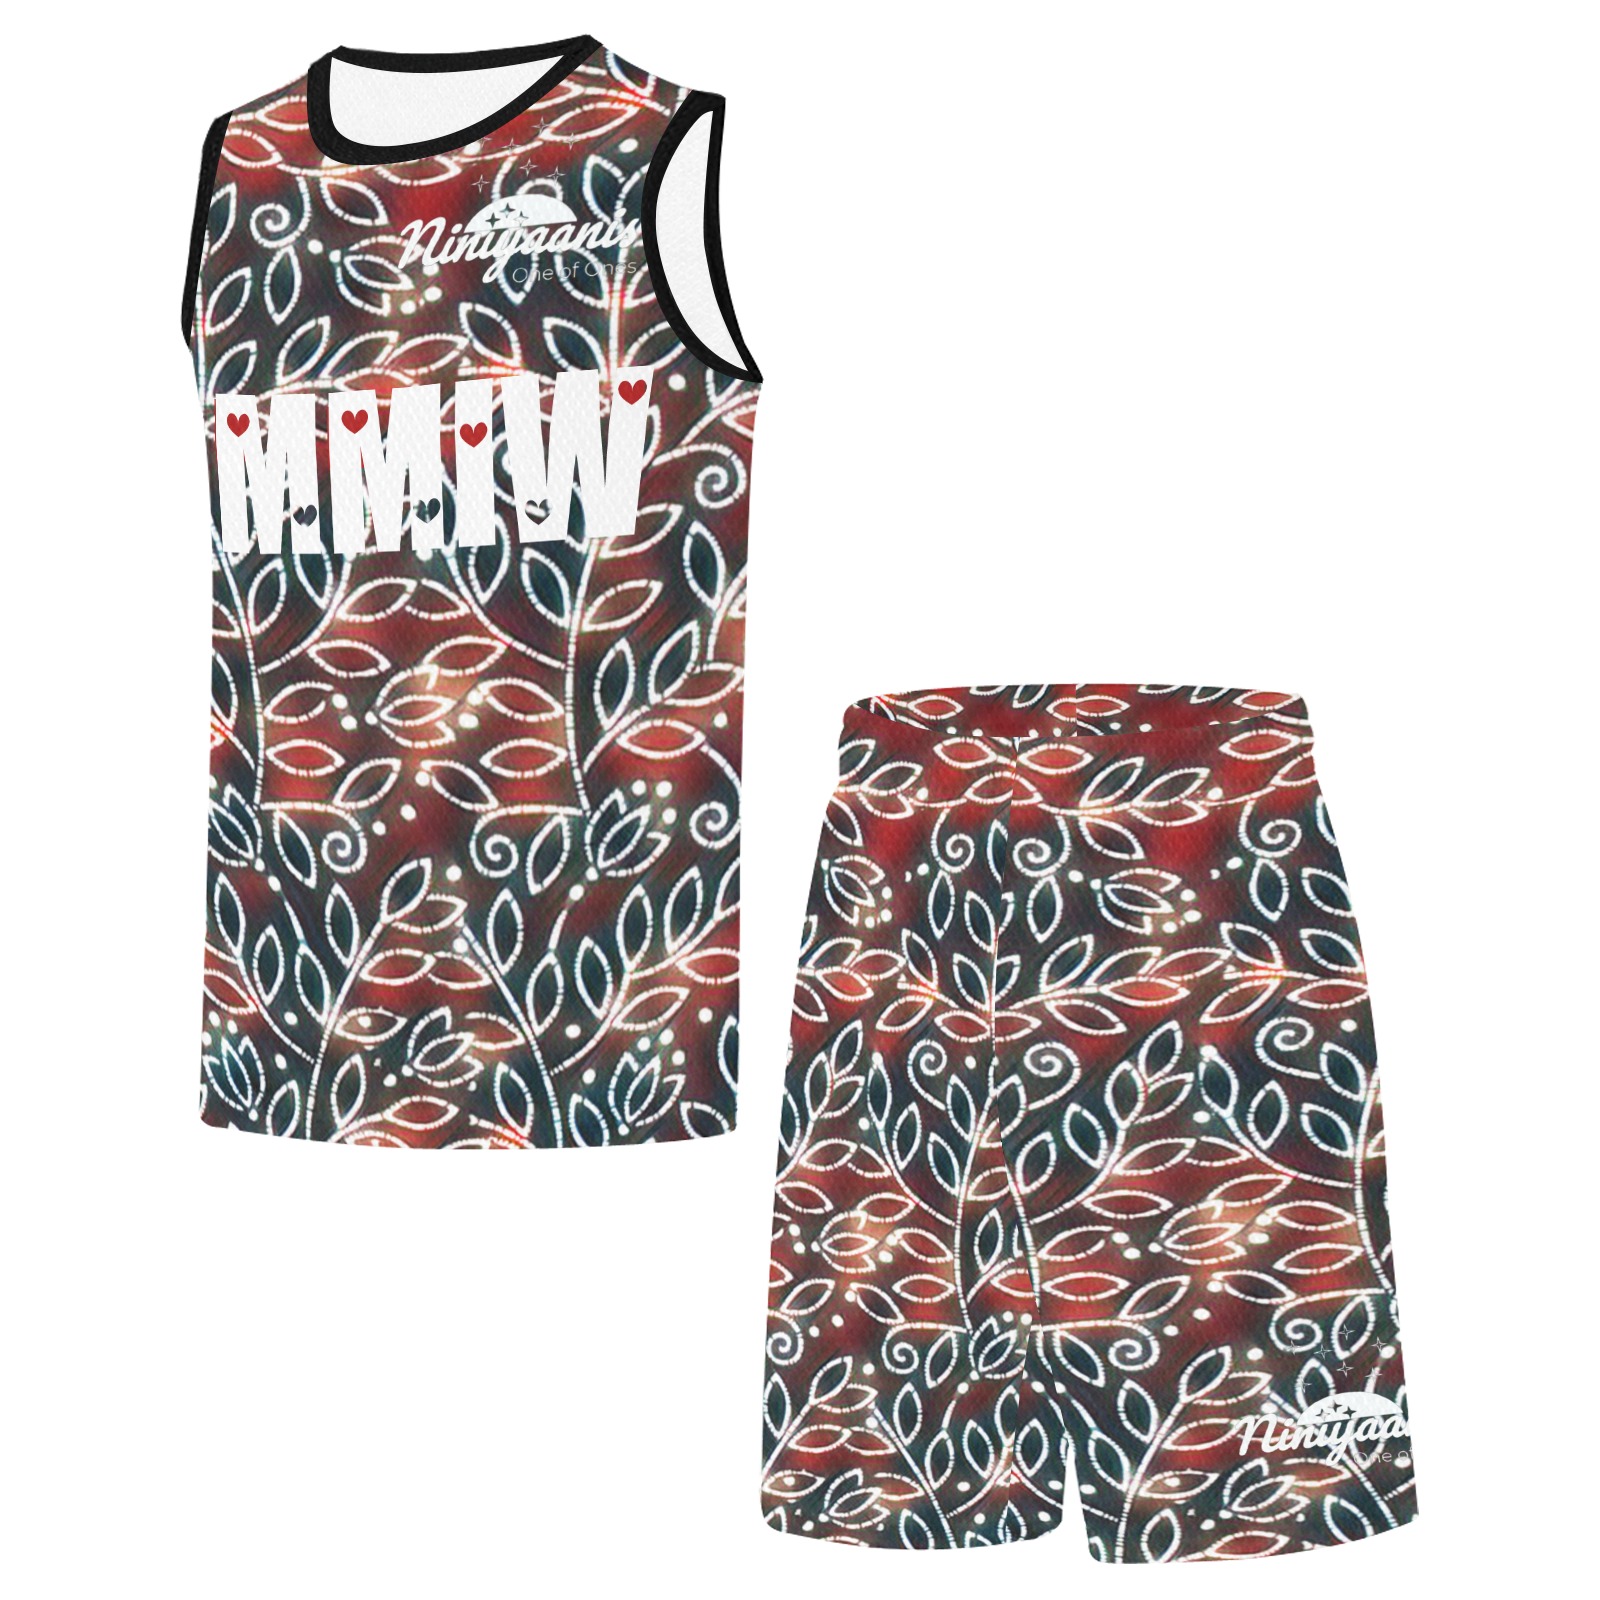 MMIW Delorme All Over Print Basketball Uniform